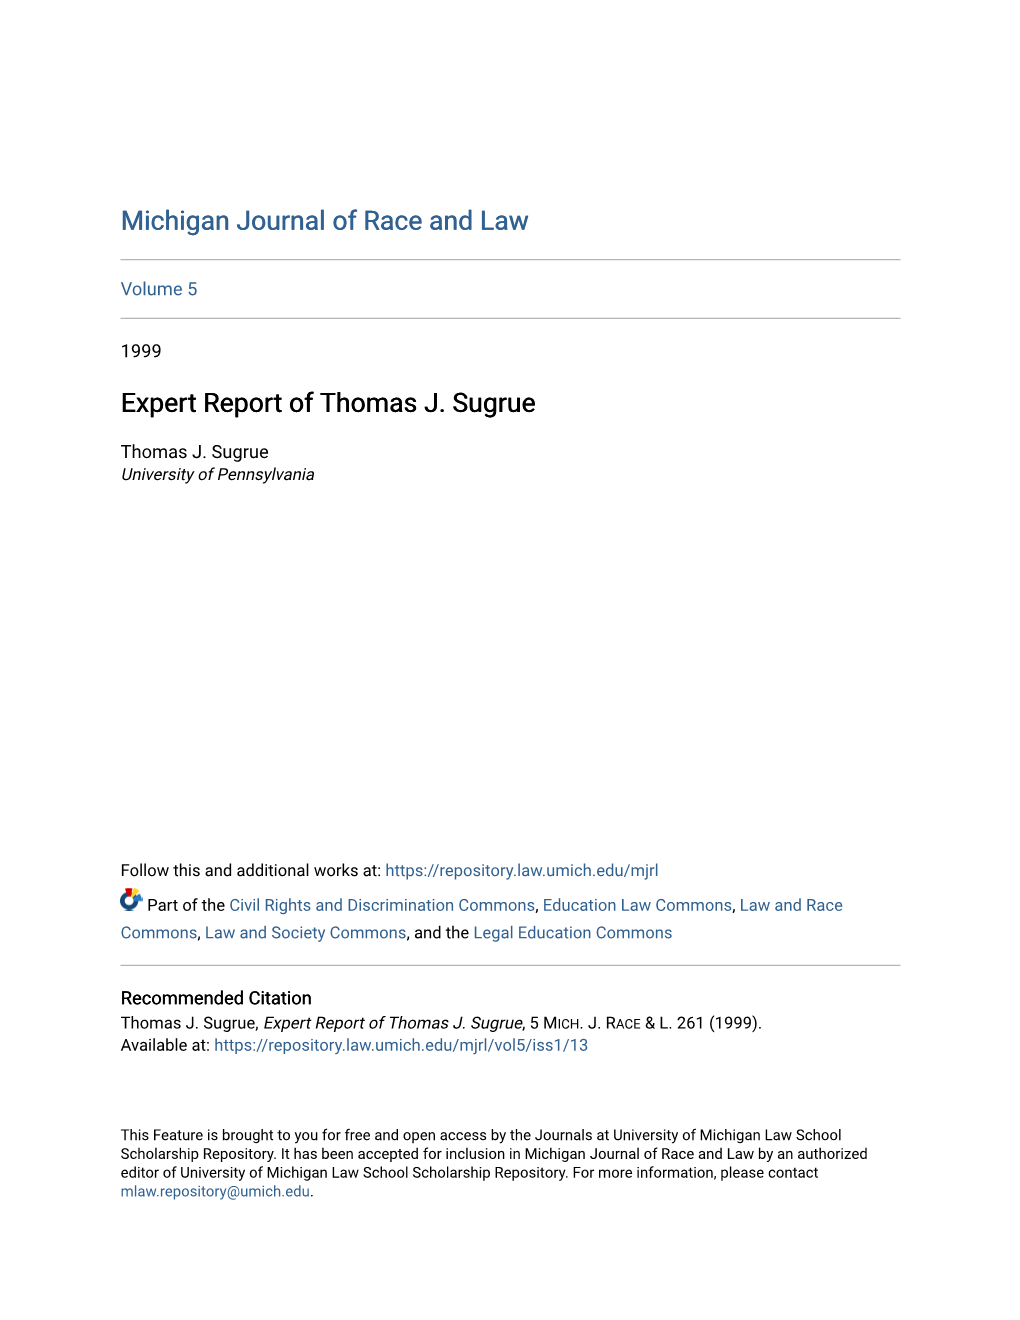 Expert Report of Thomas J. Sugrue